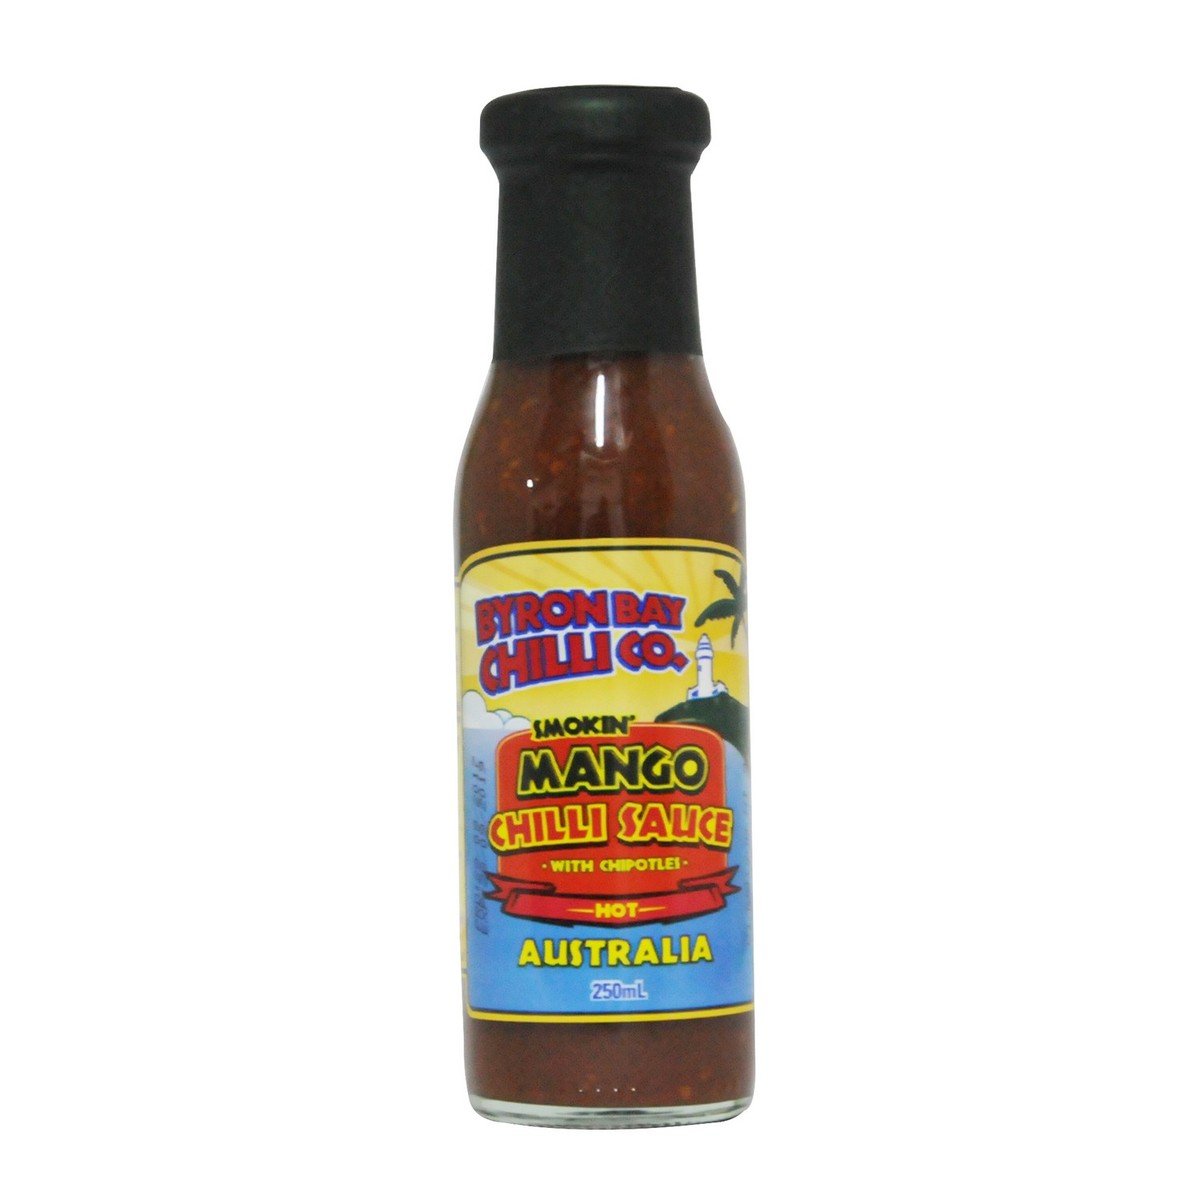 Byron Bay Smokin Mango Chilli Sauce with Chipotlei 250ml